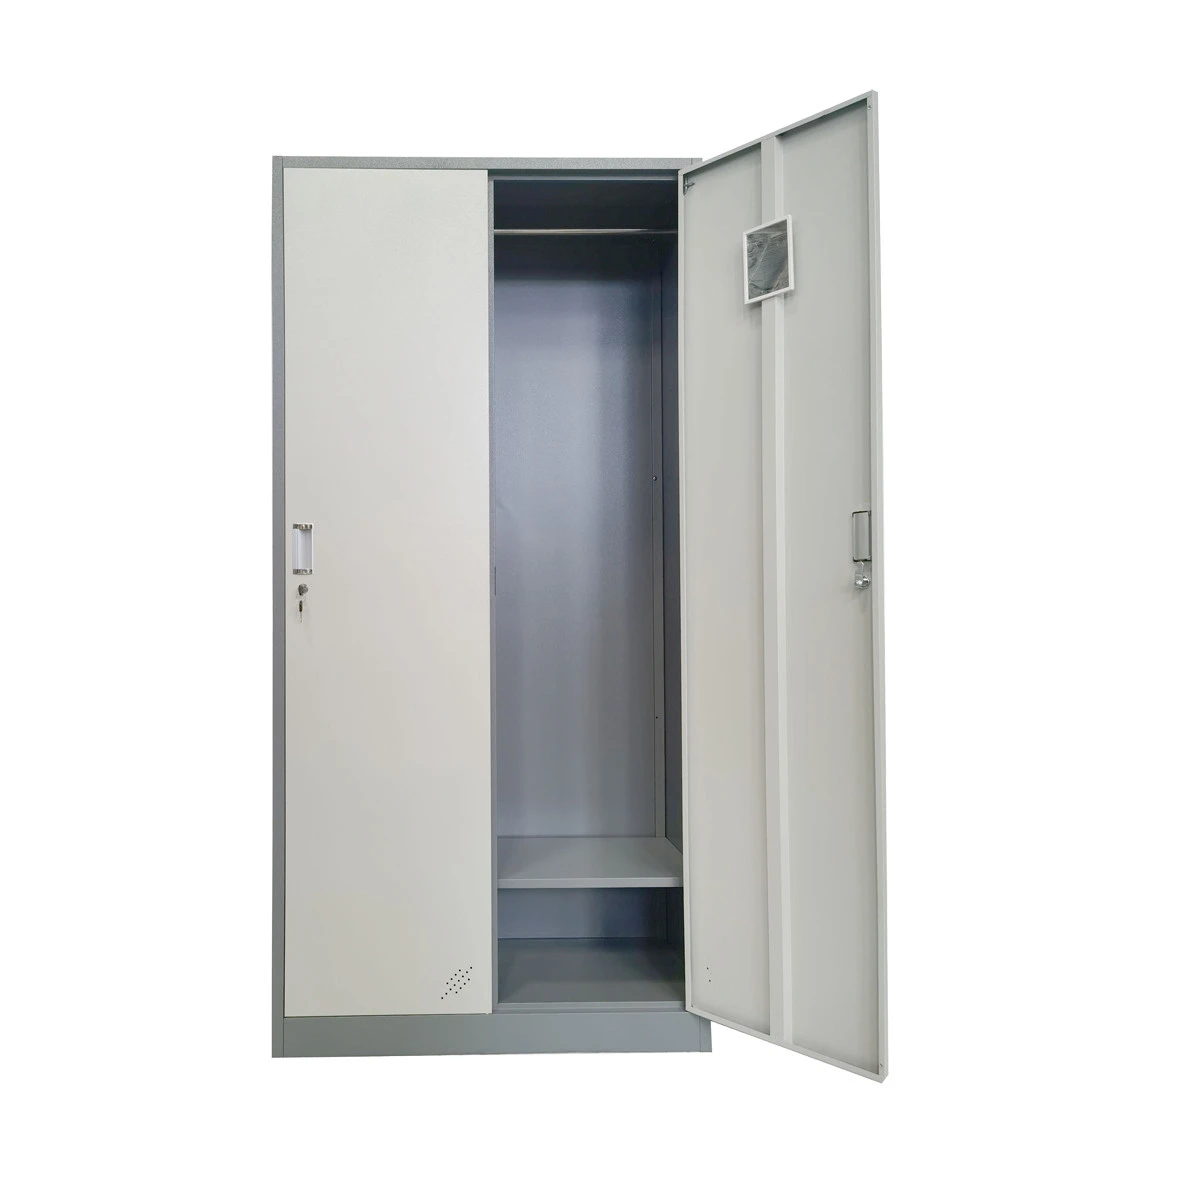 2 doors office furniture metal steel home hospital hanging cupboard with shelves storage cabinet locker